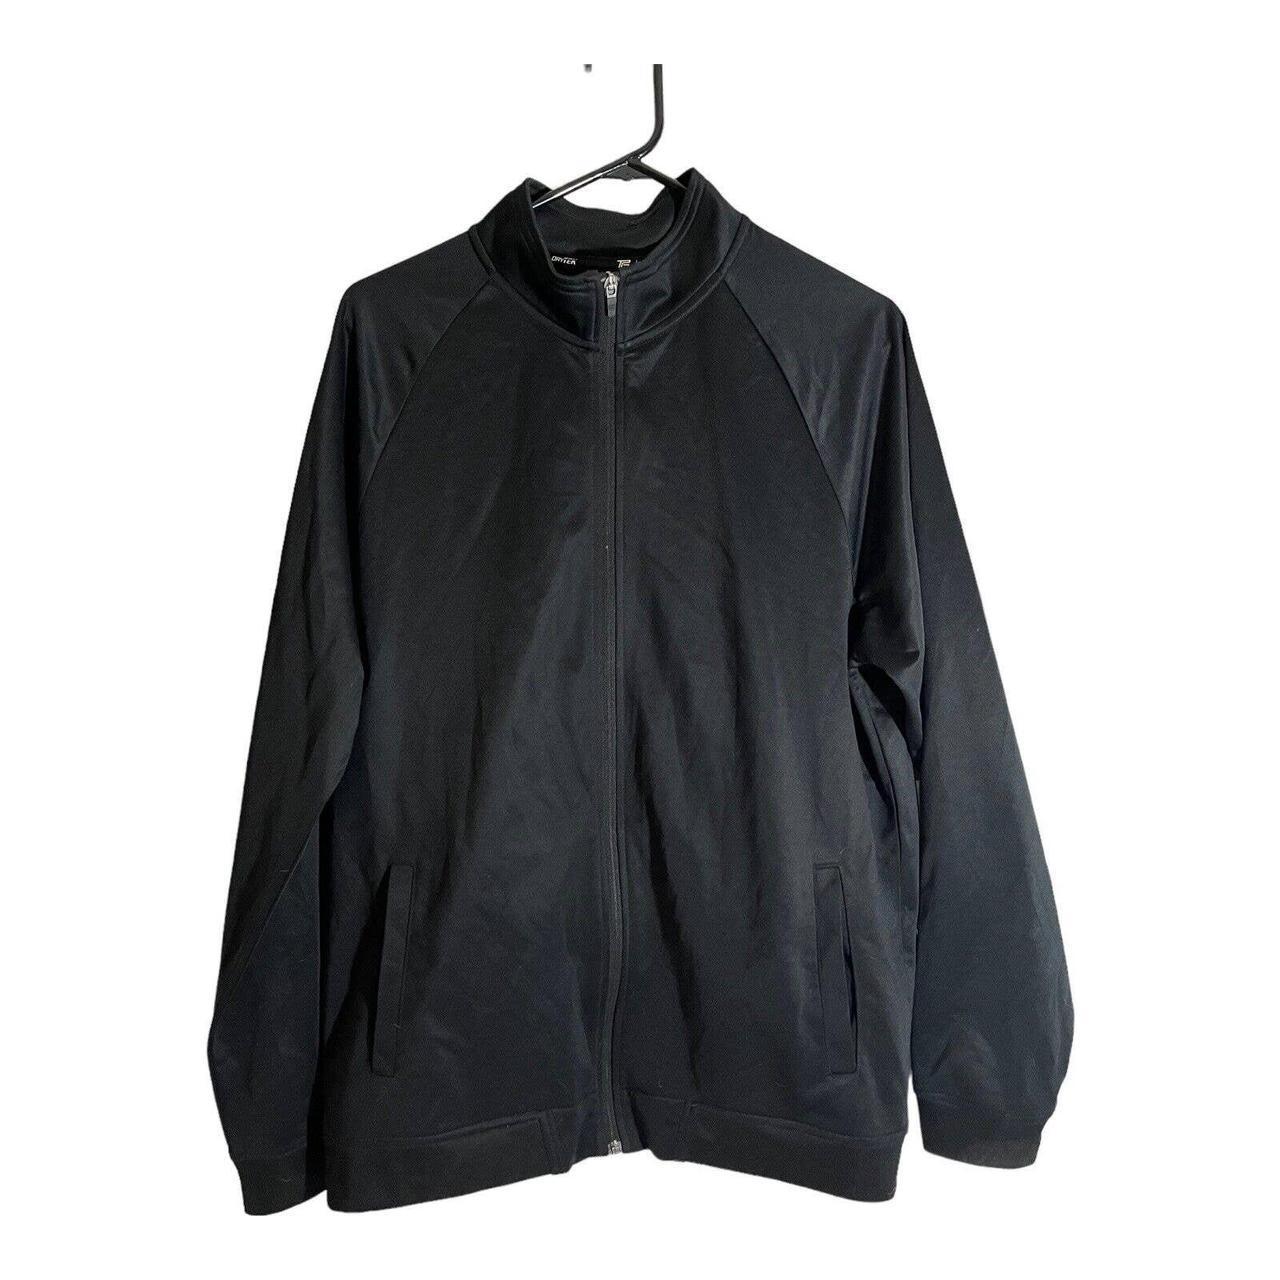 tek gear zip up jacket worn, in great condition size - Depop